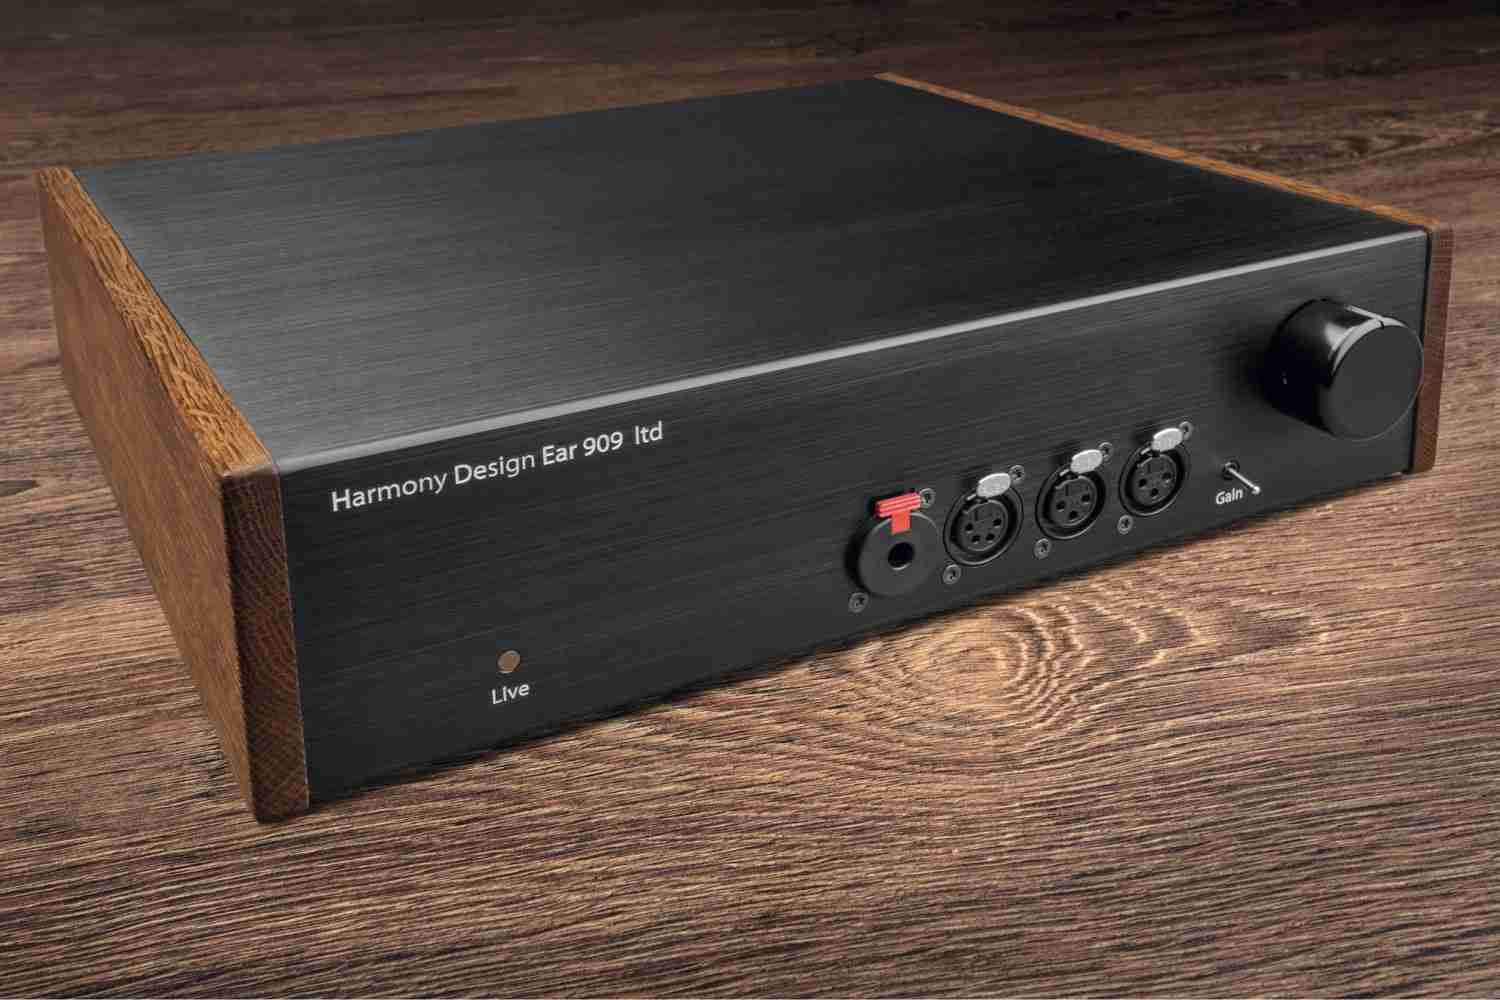 Kopfhörerverstärker Harmony Design Ear 909 ltd. im Test, Bild 1